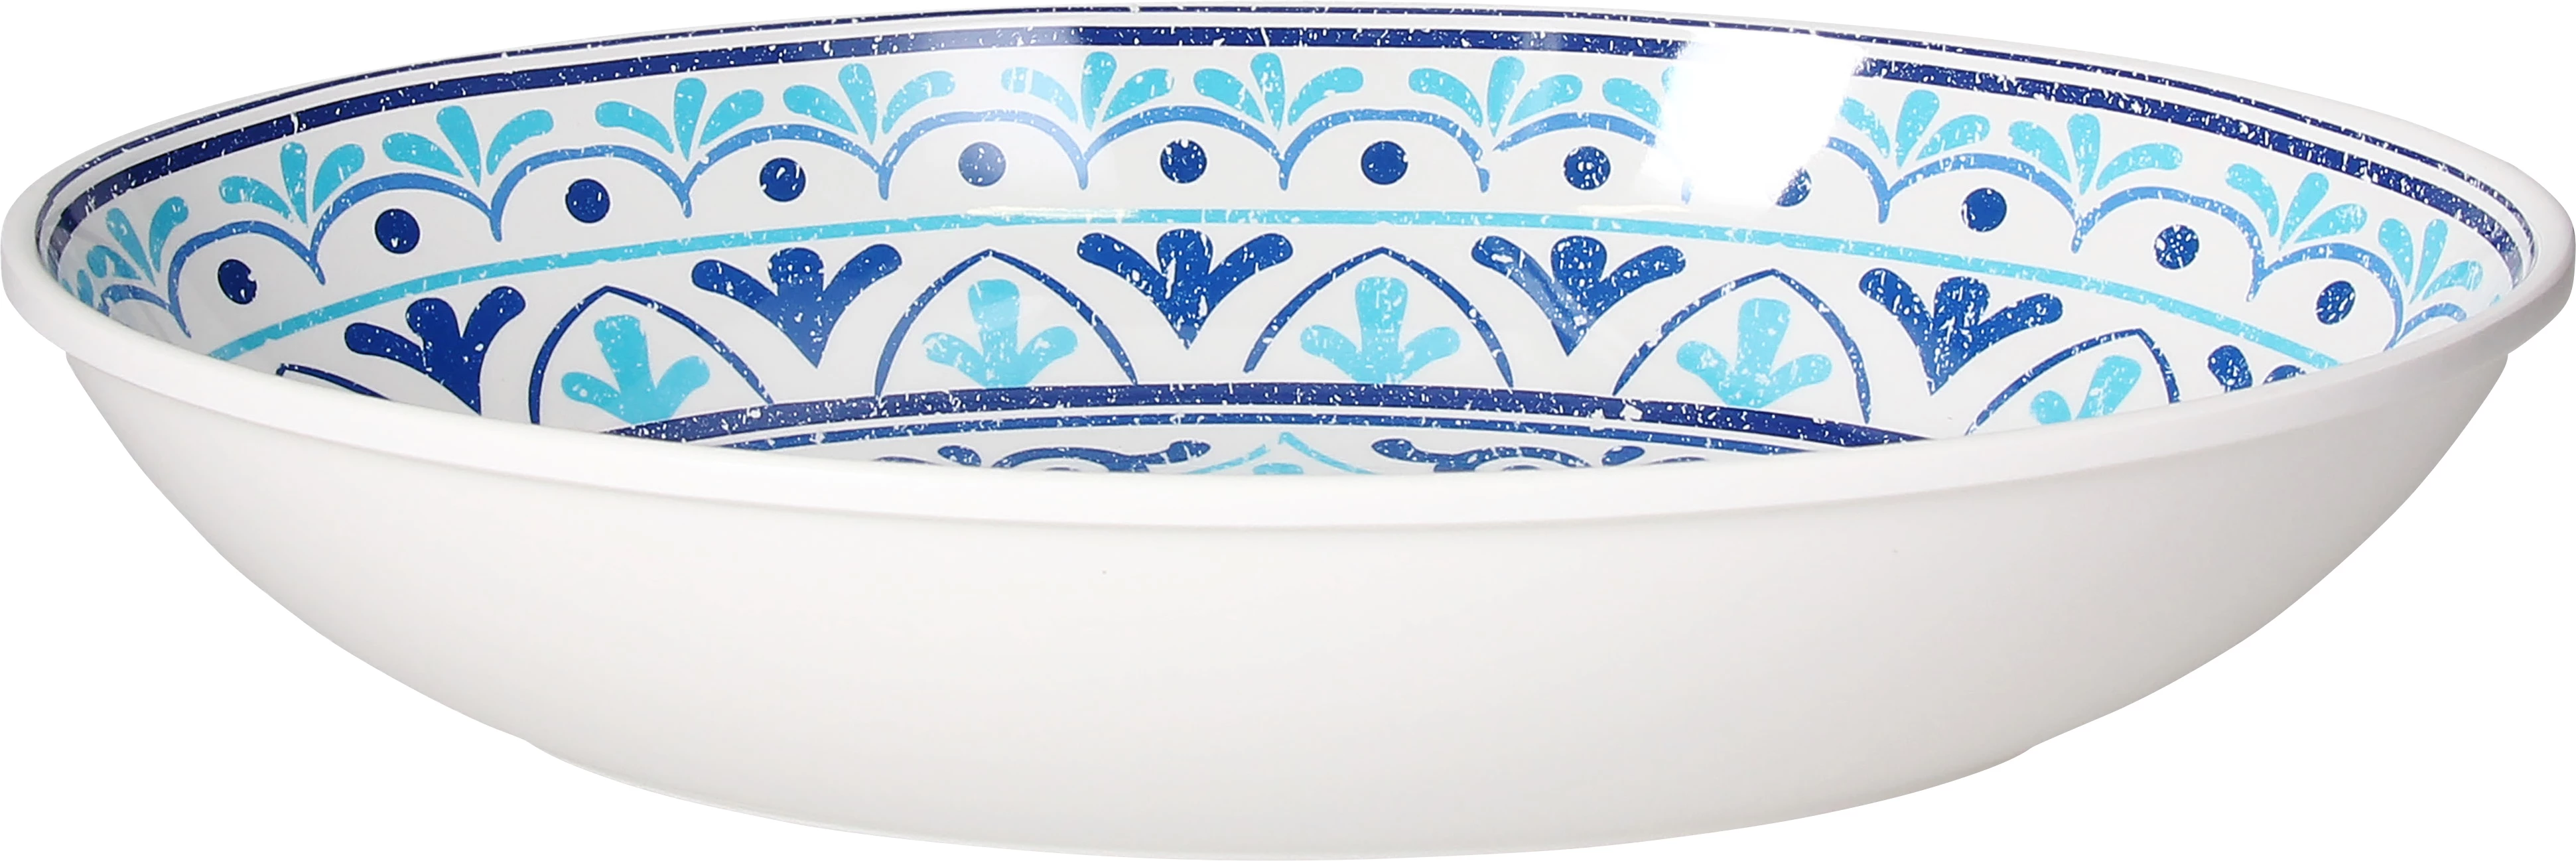 Tognana Narciso Cefalu skål, oval, blå/blå, 220 cl, 34 x 23 cm